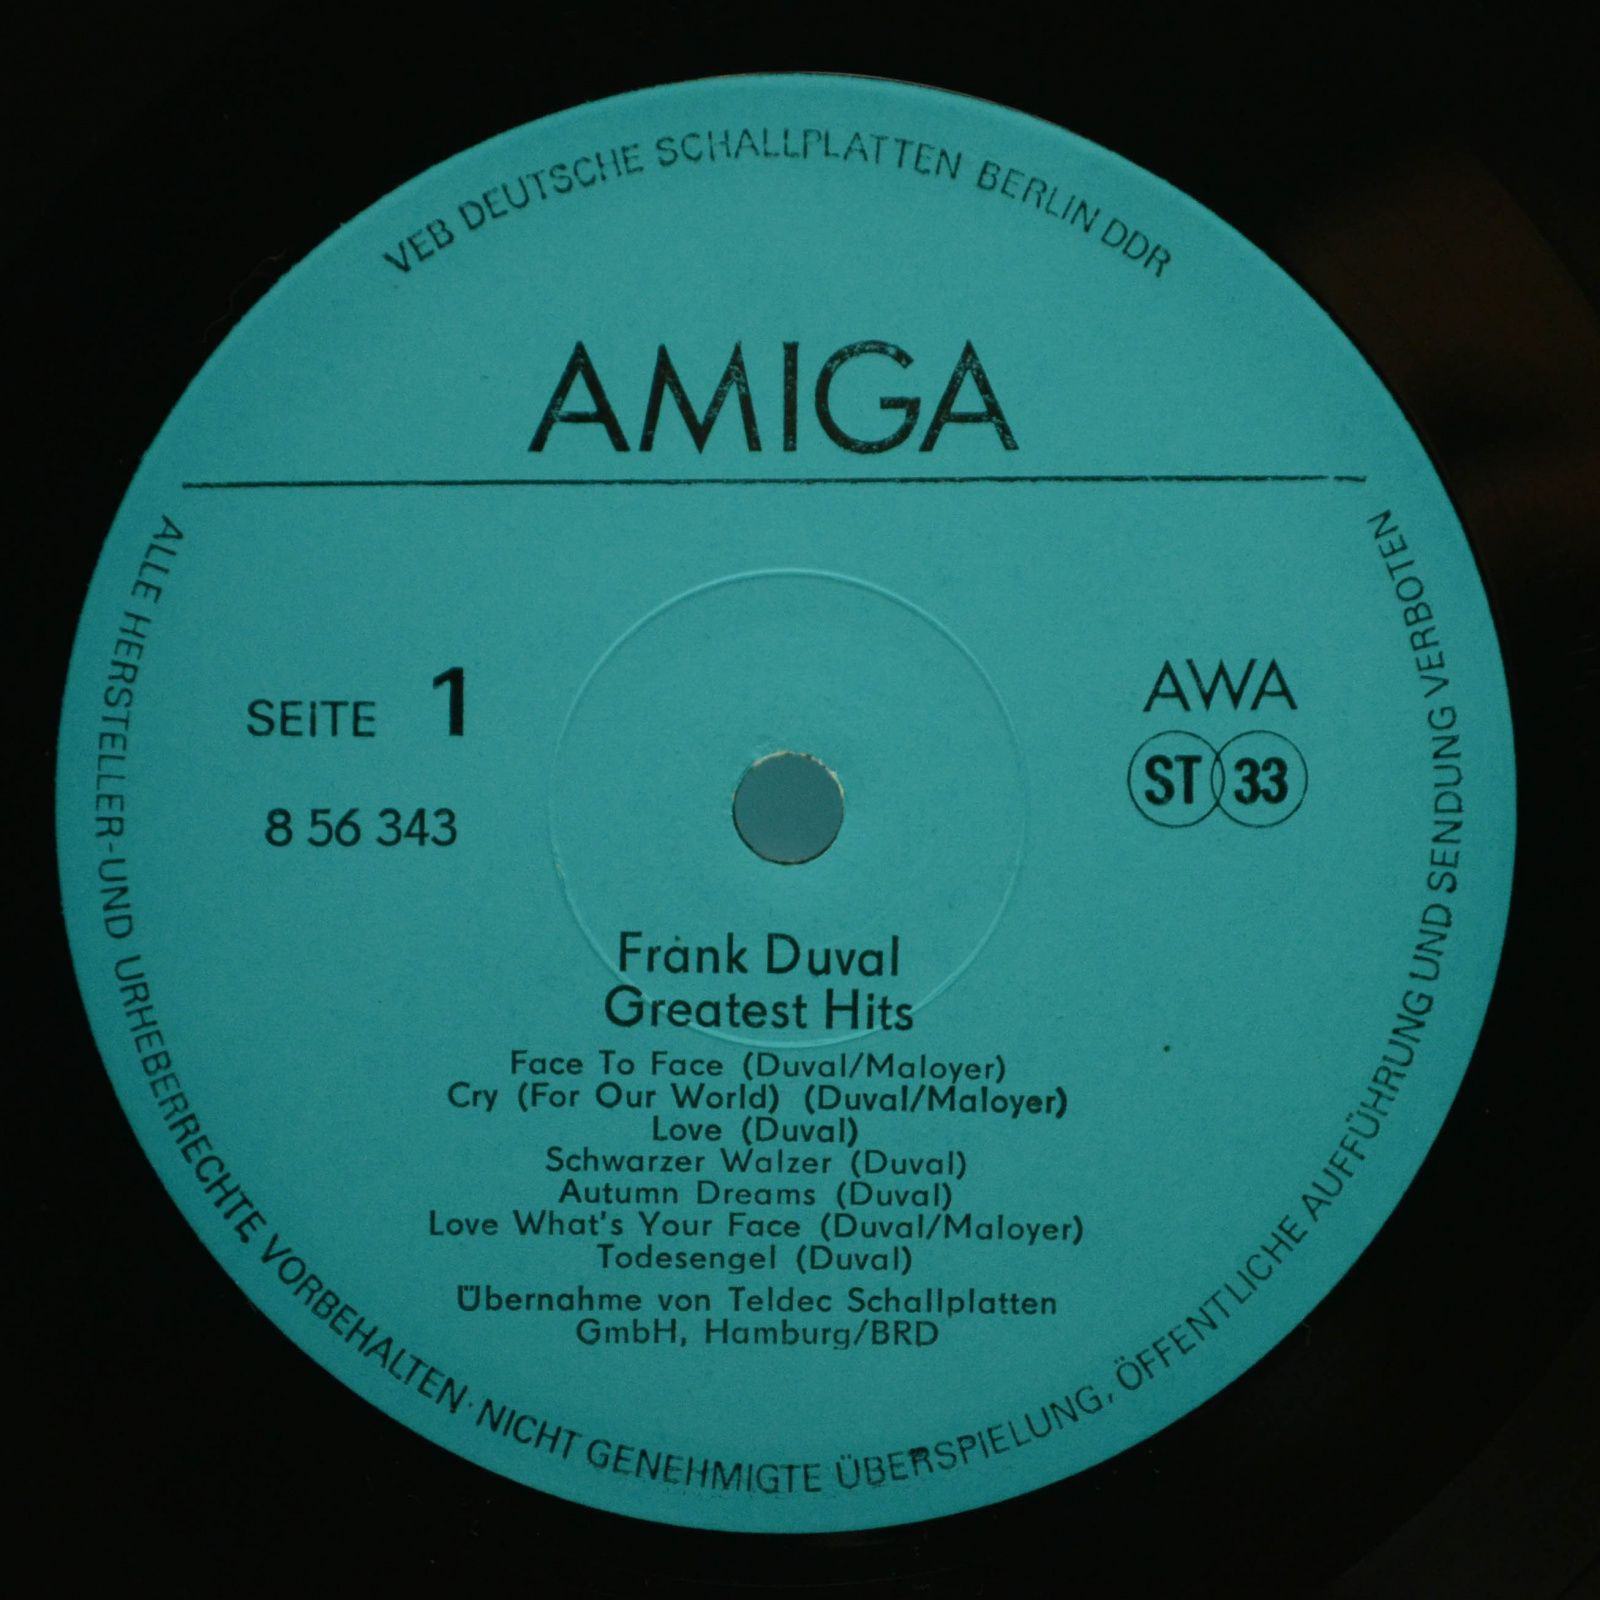 Frank Duval — Greatest Hits, 1988